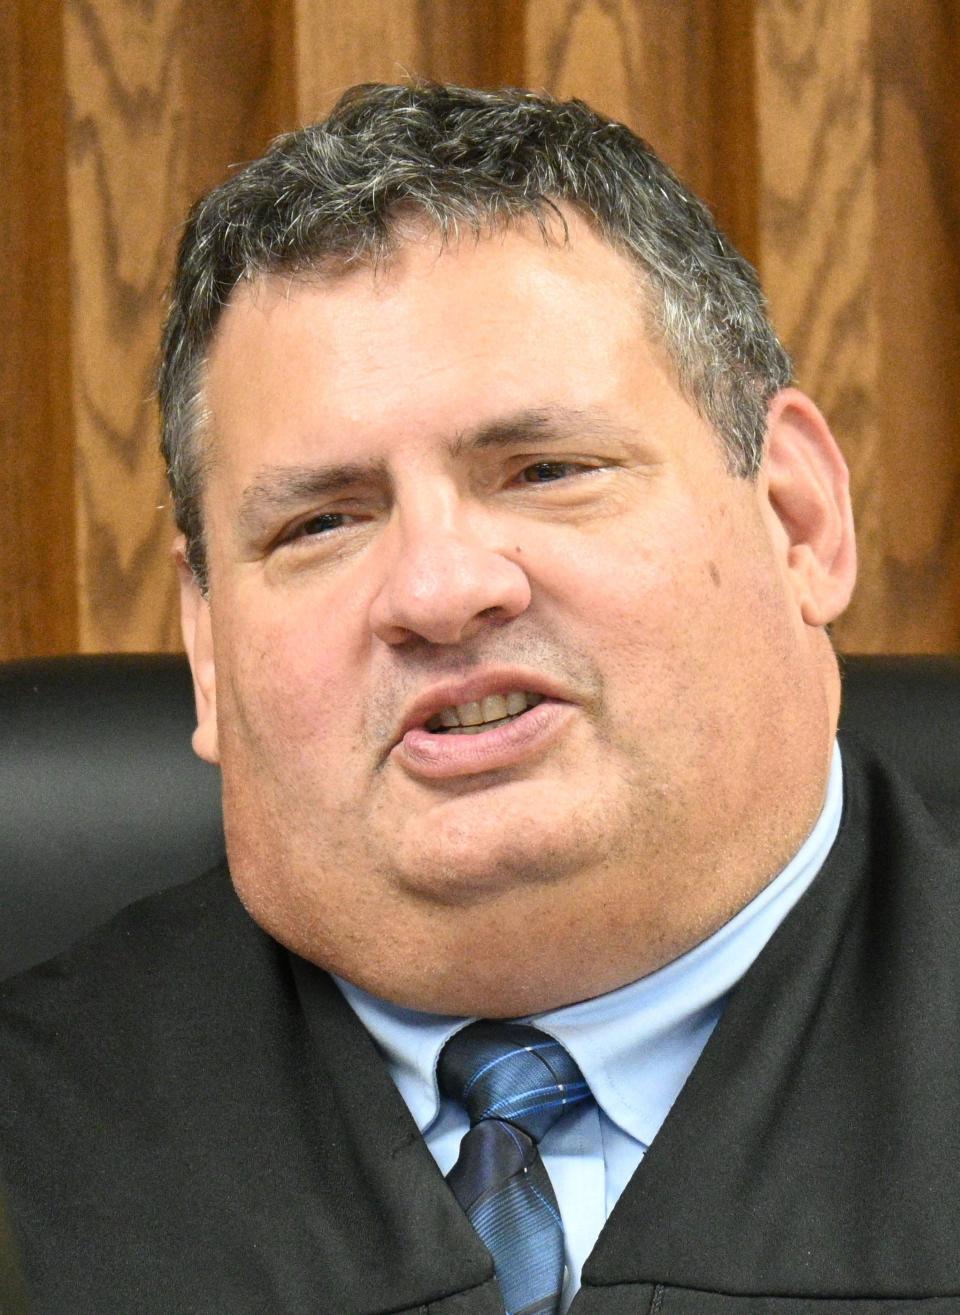 Judge Stutesman